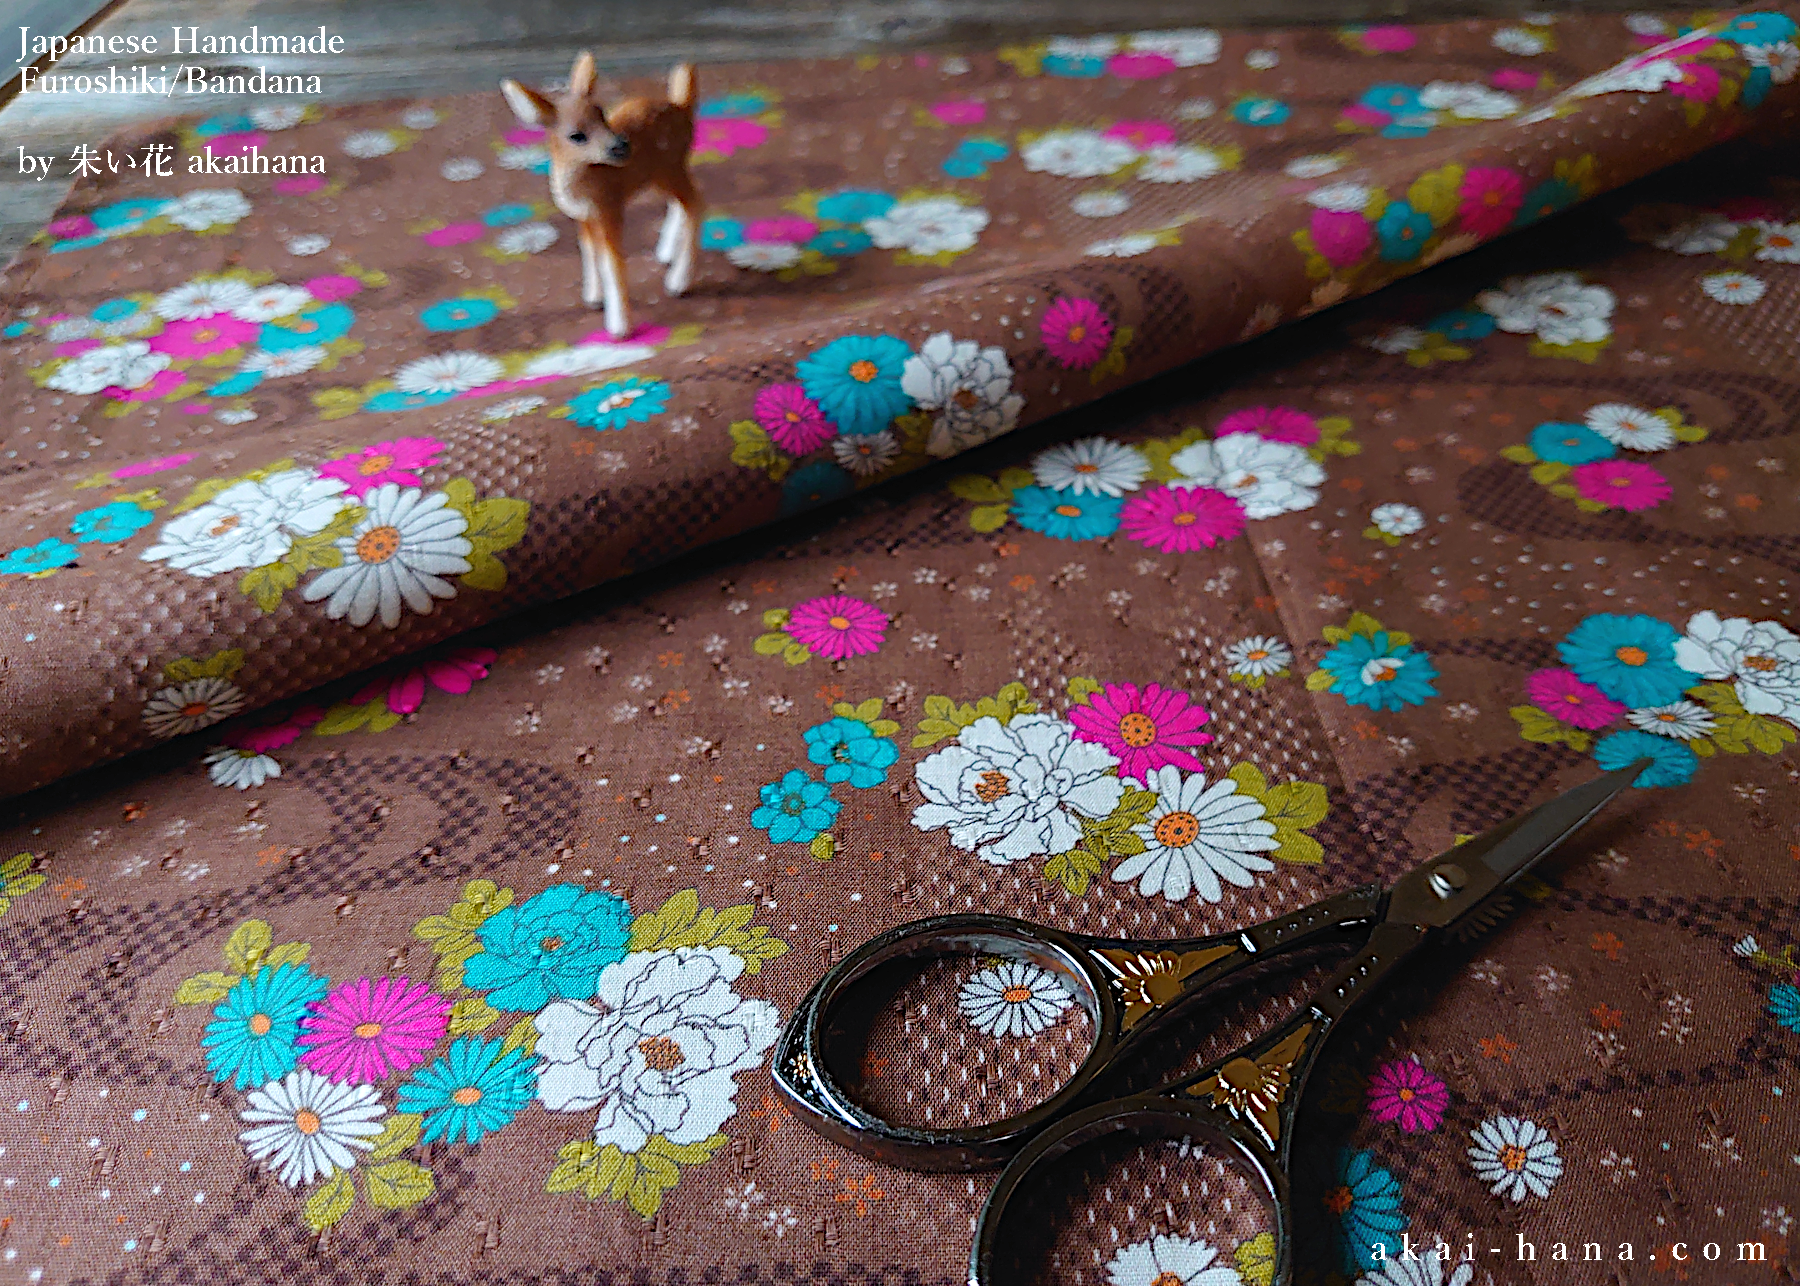 Handmade Blue Floral Drawstring Bags Reusable Kimono Fabric 